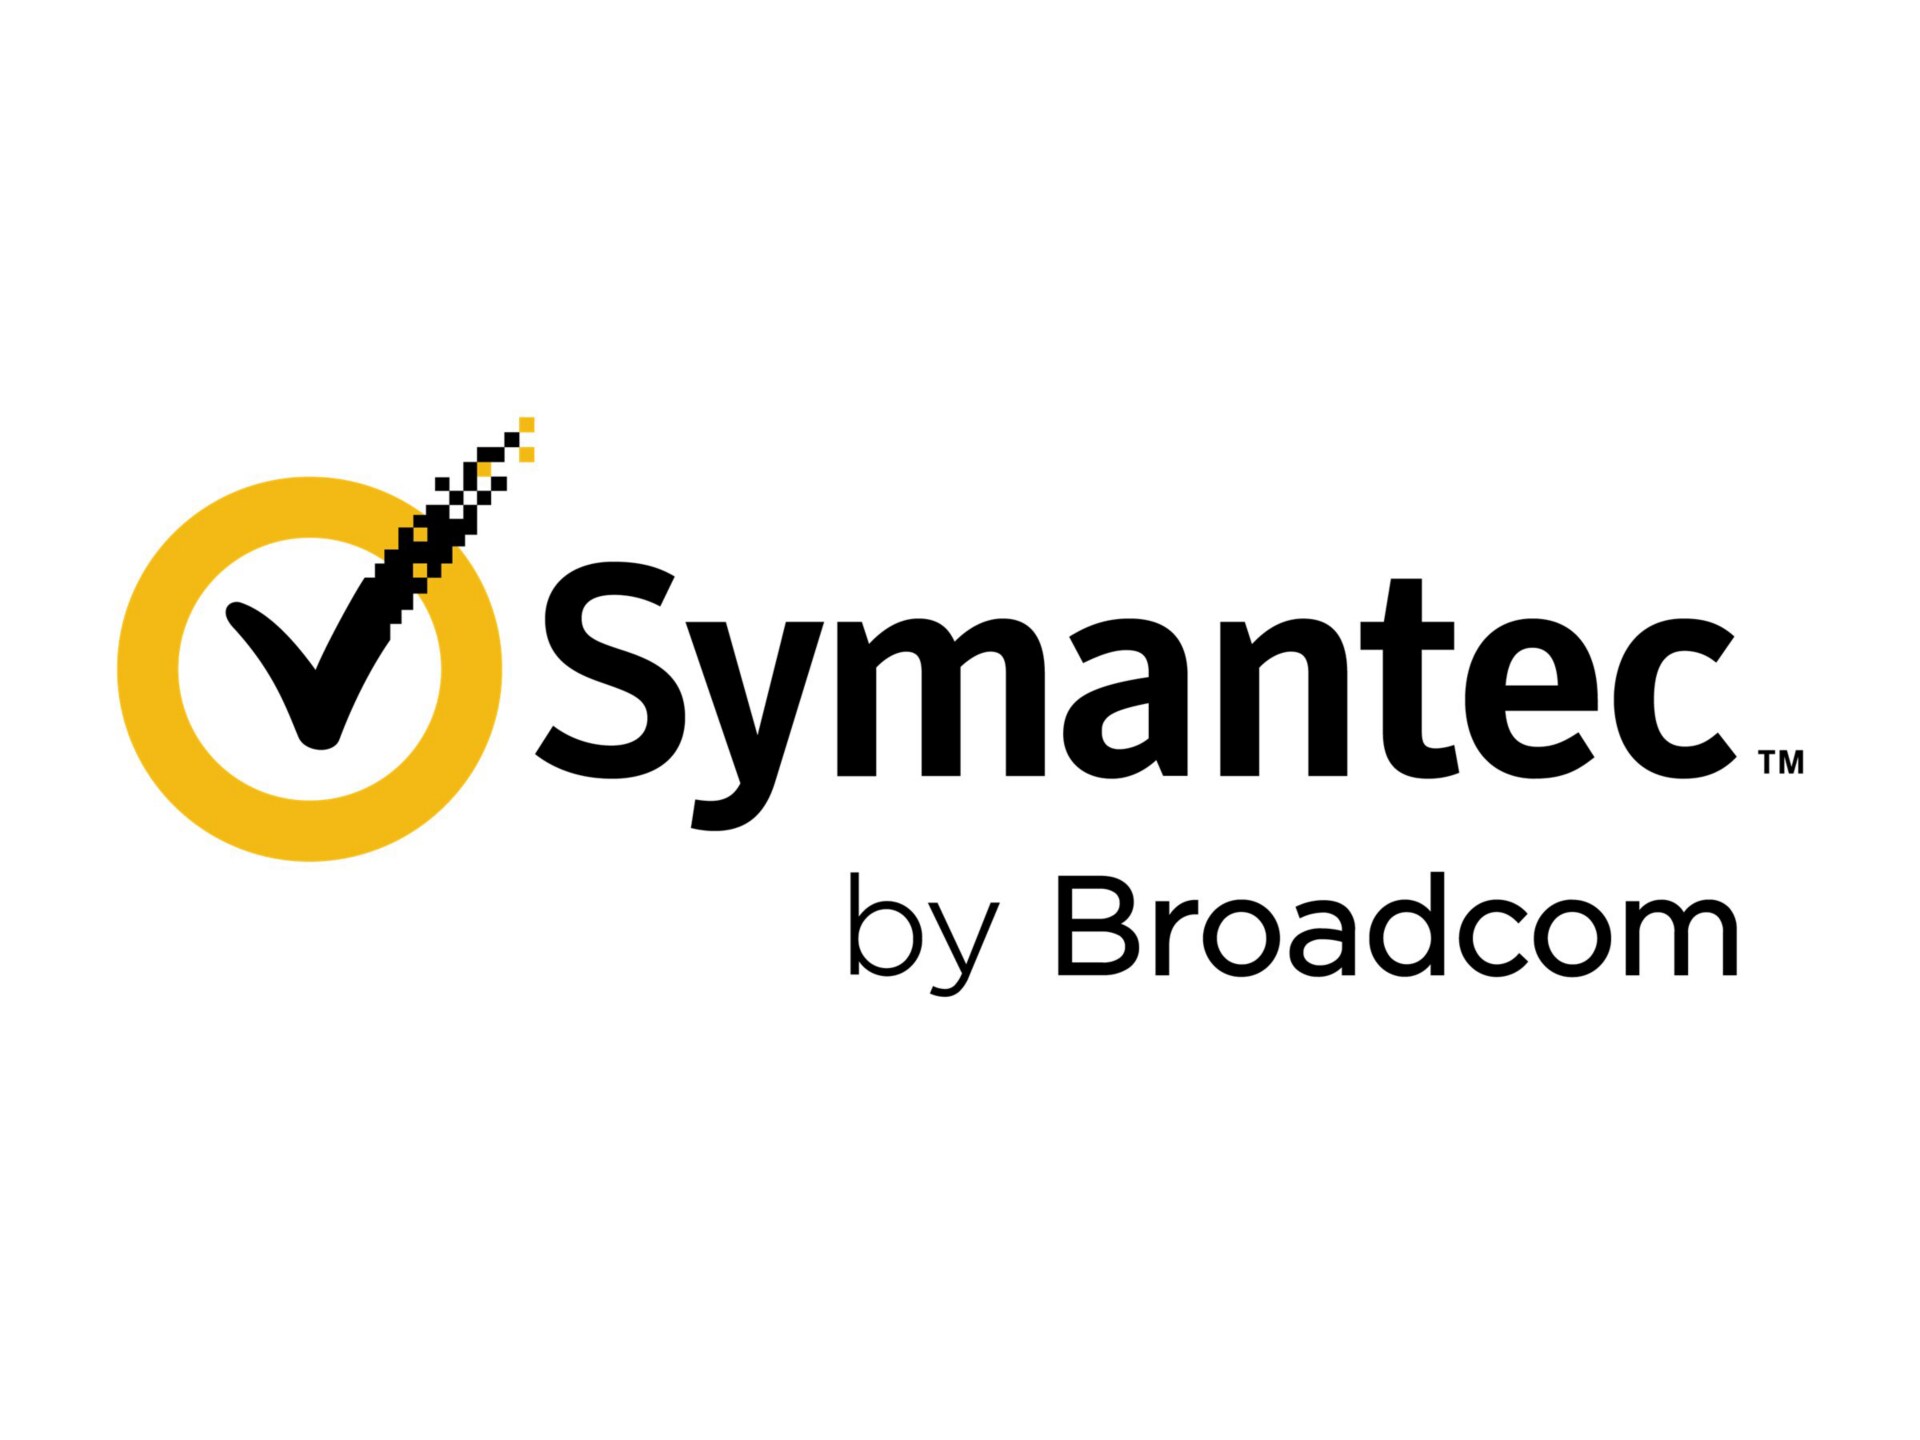 Symantec Education Training Credits - pre-purchasing training funds unit